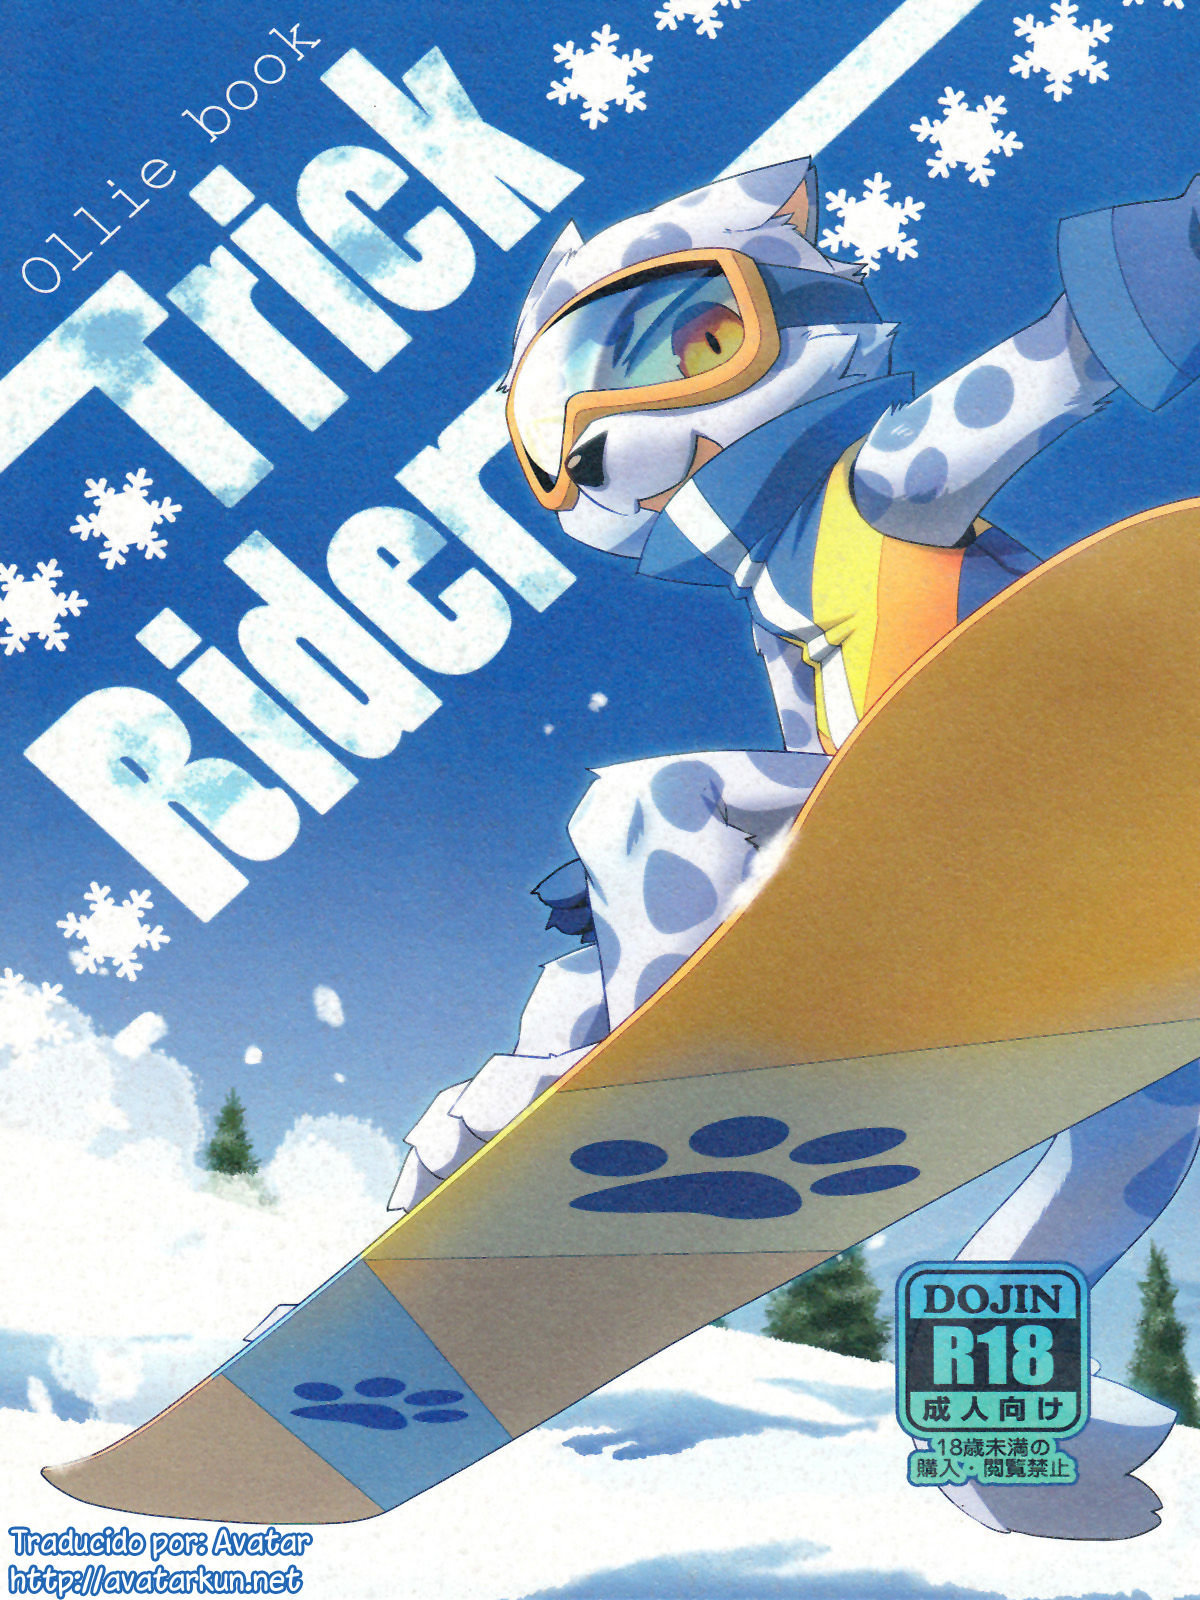 Trick Rider - 3